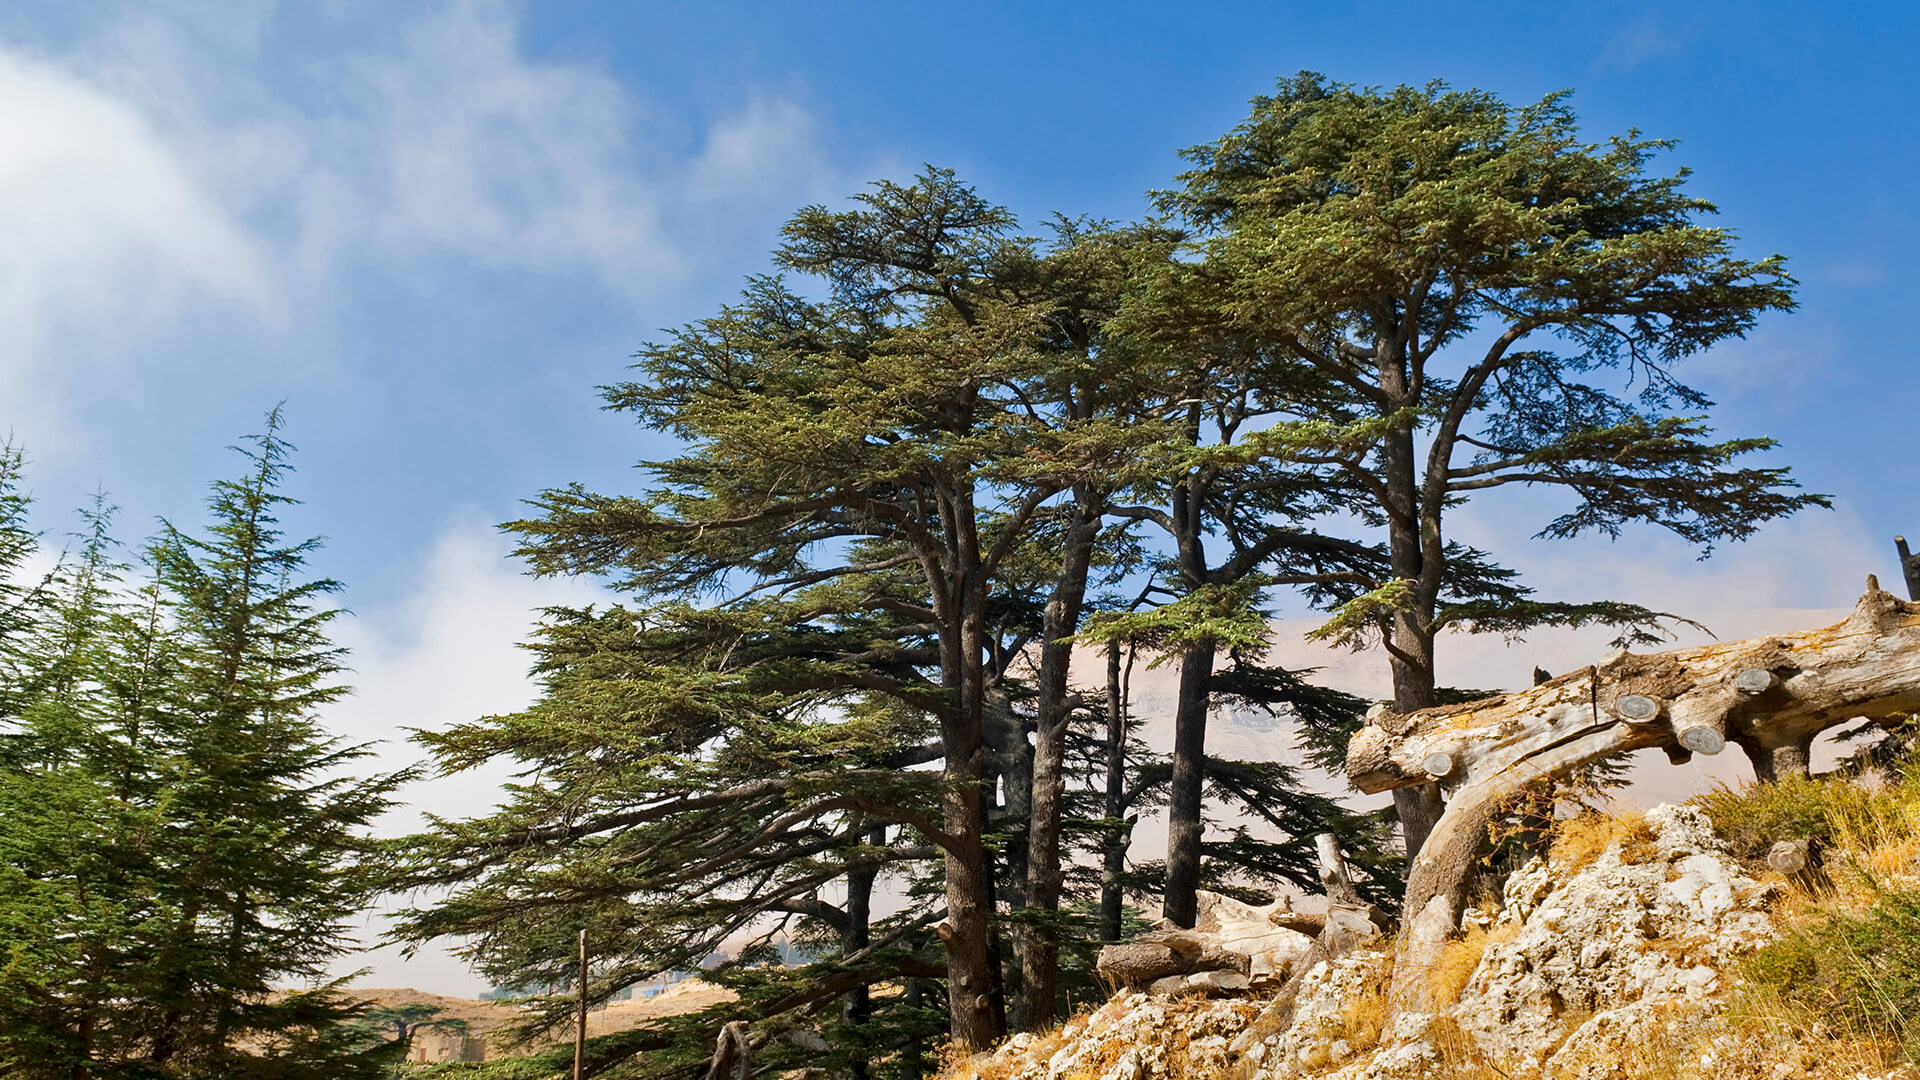 A grouping of cedars on a rocky hillside.